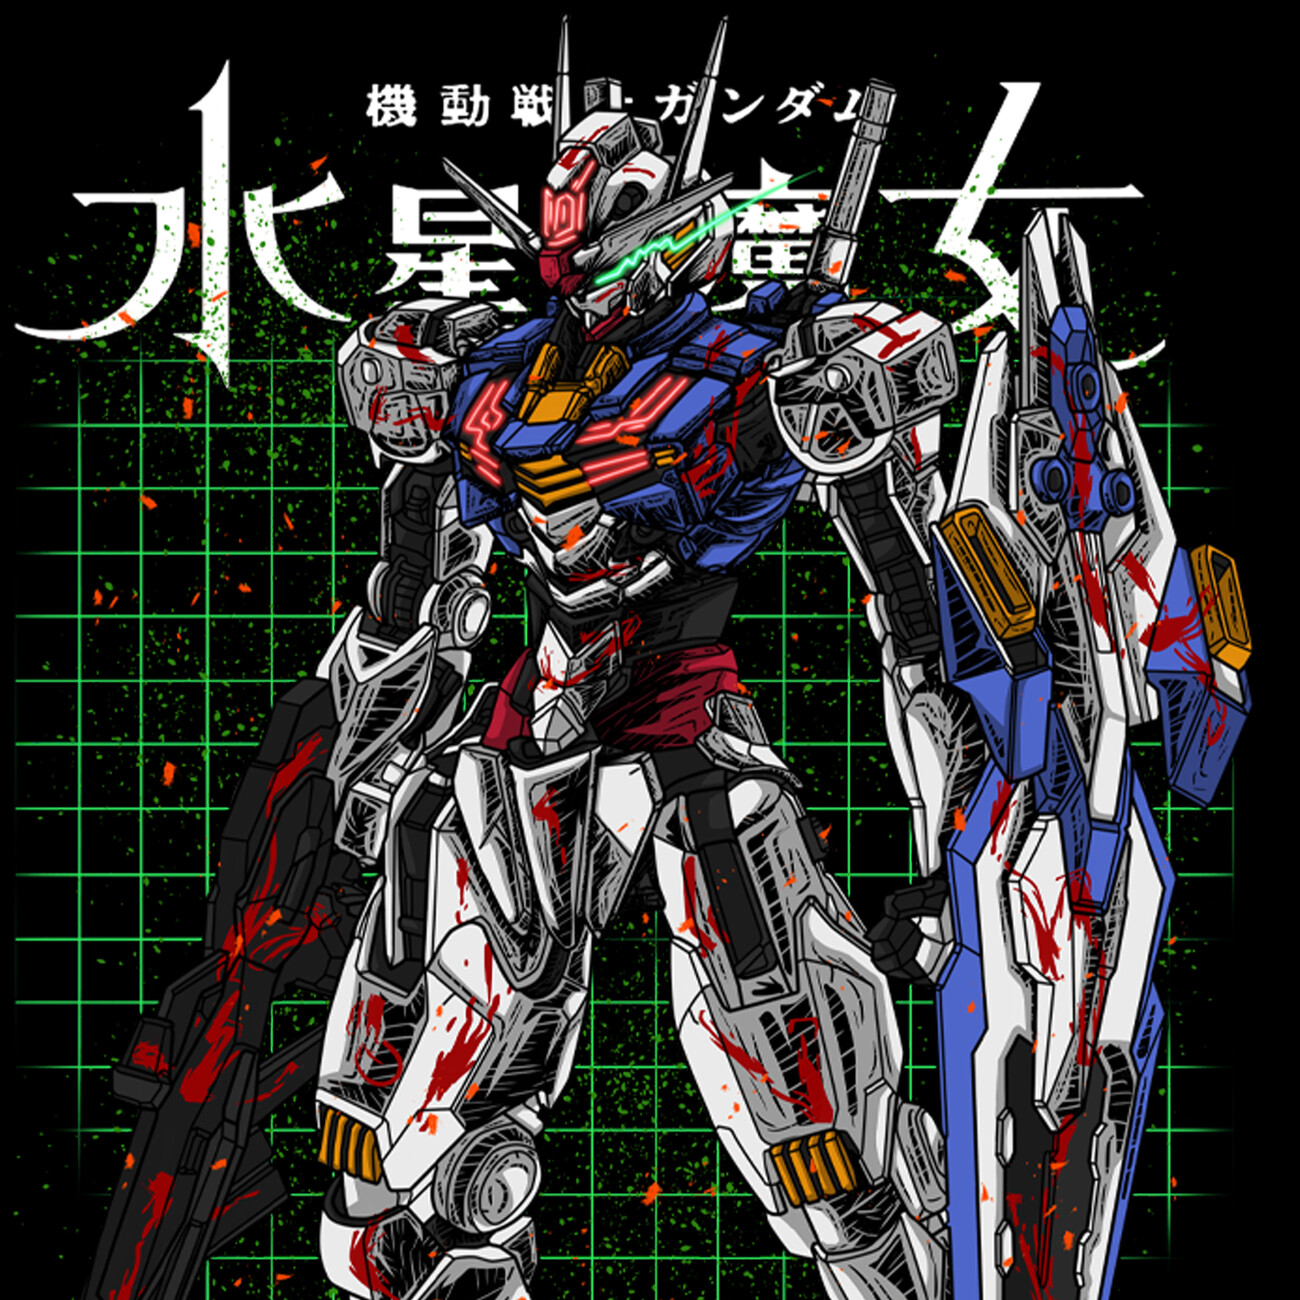 Poster, Bilde Aerial Gundam, Merchandise